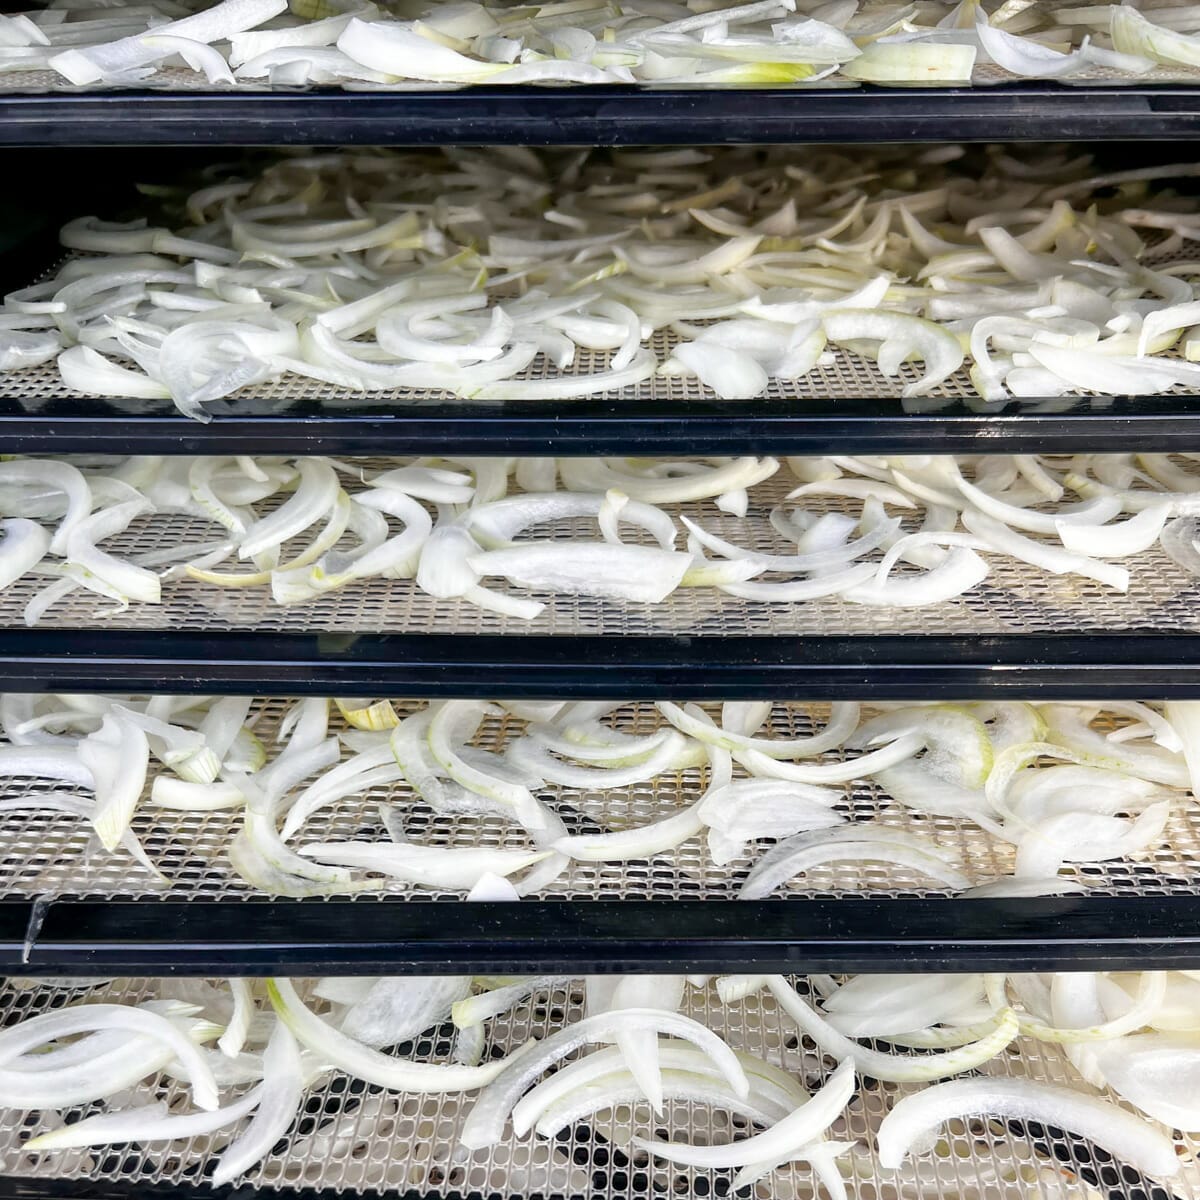 raw onion slices spread on multiple dehydrator trays